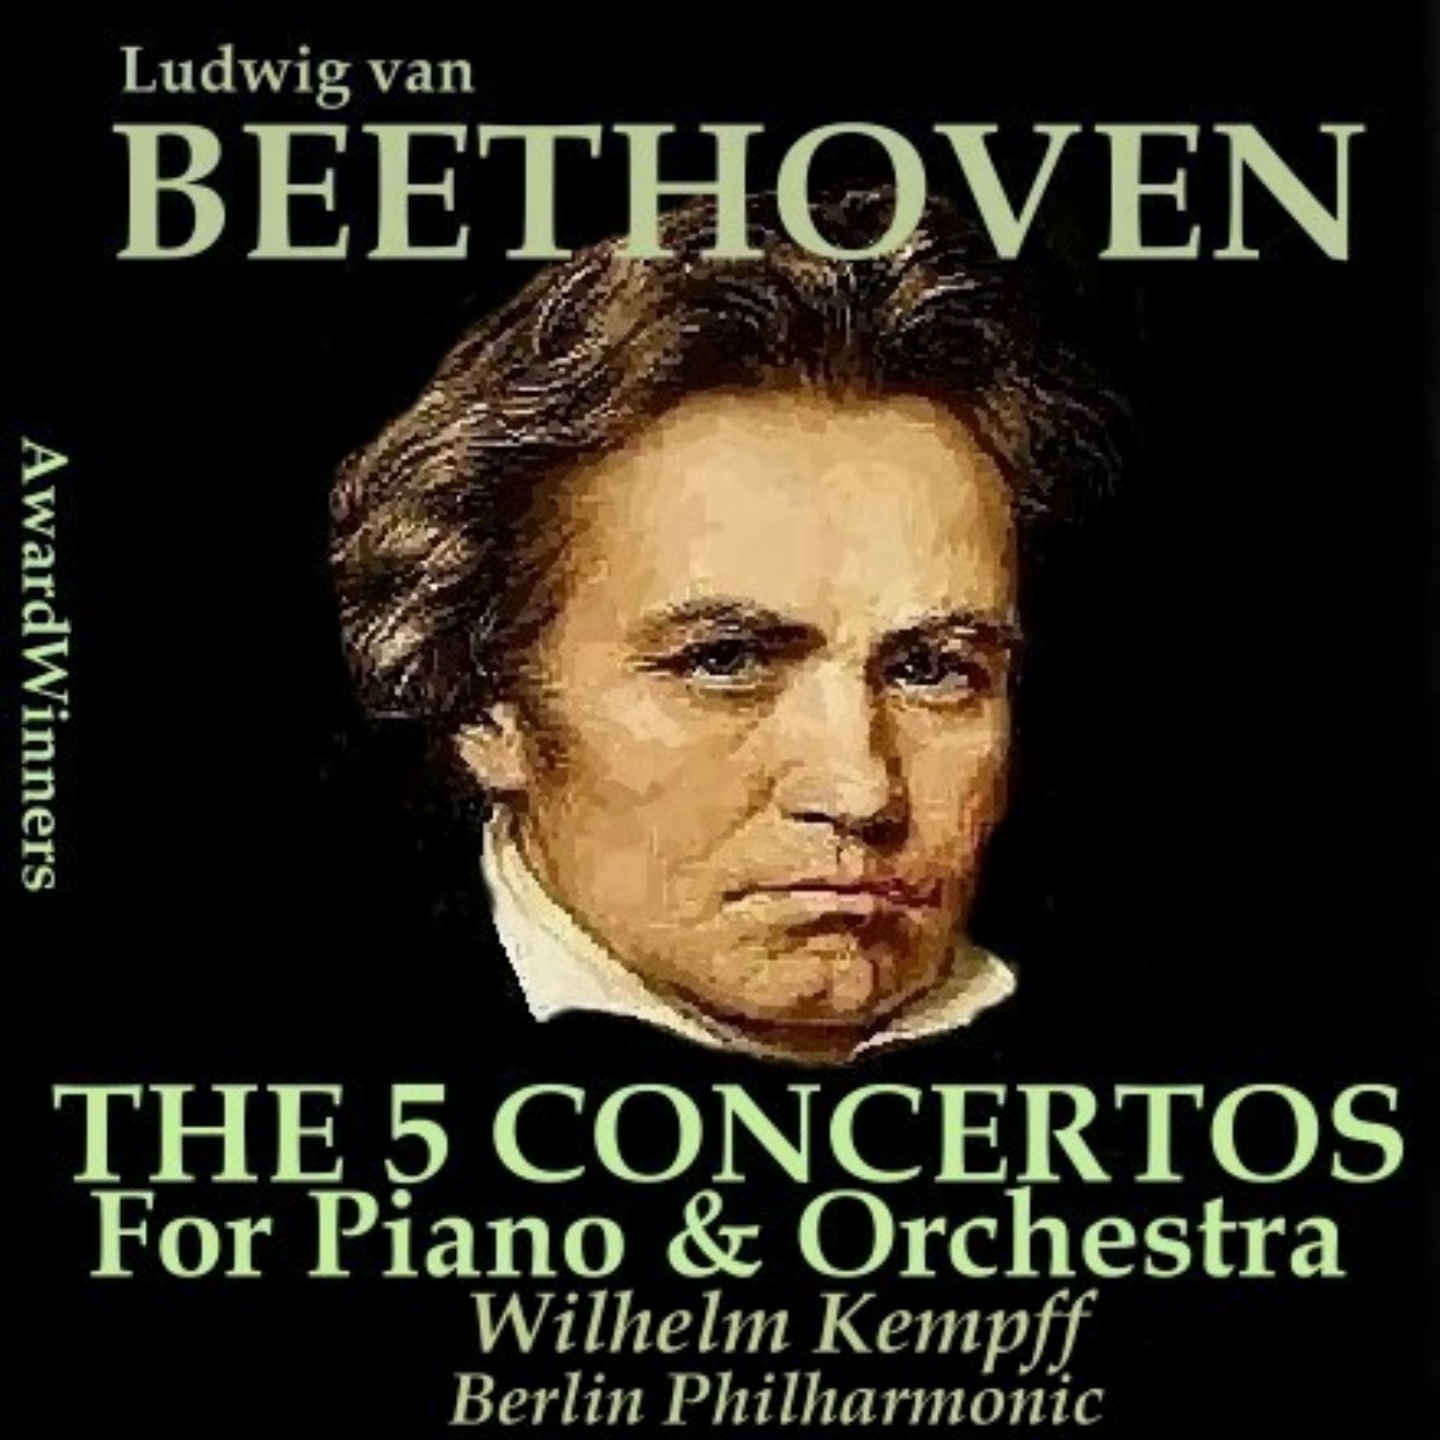 Concerto No. 2 for Piano and Orchestra In B Flat Major, Op. 19: I. Allegro Con Brio - Cadence Wilhelm Kempff